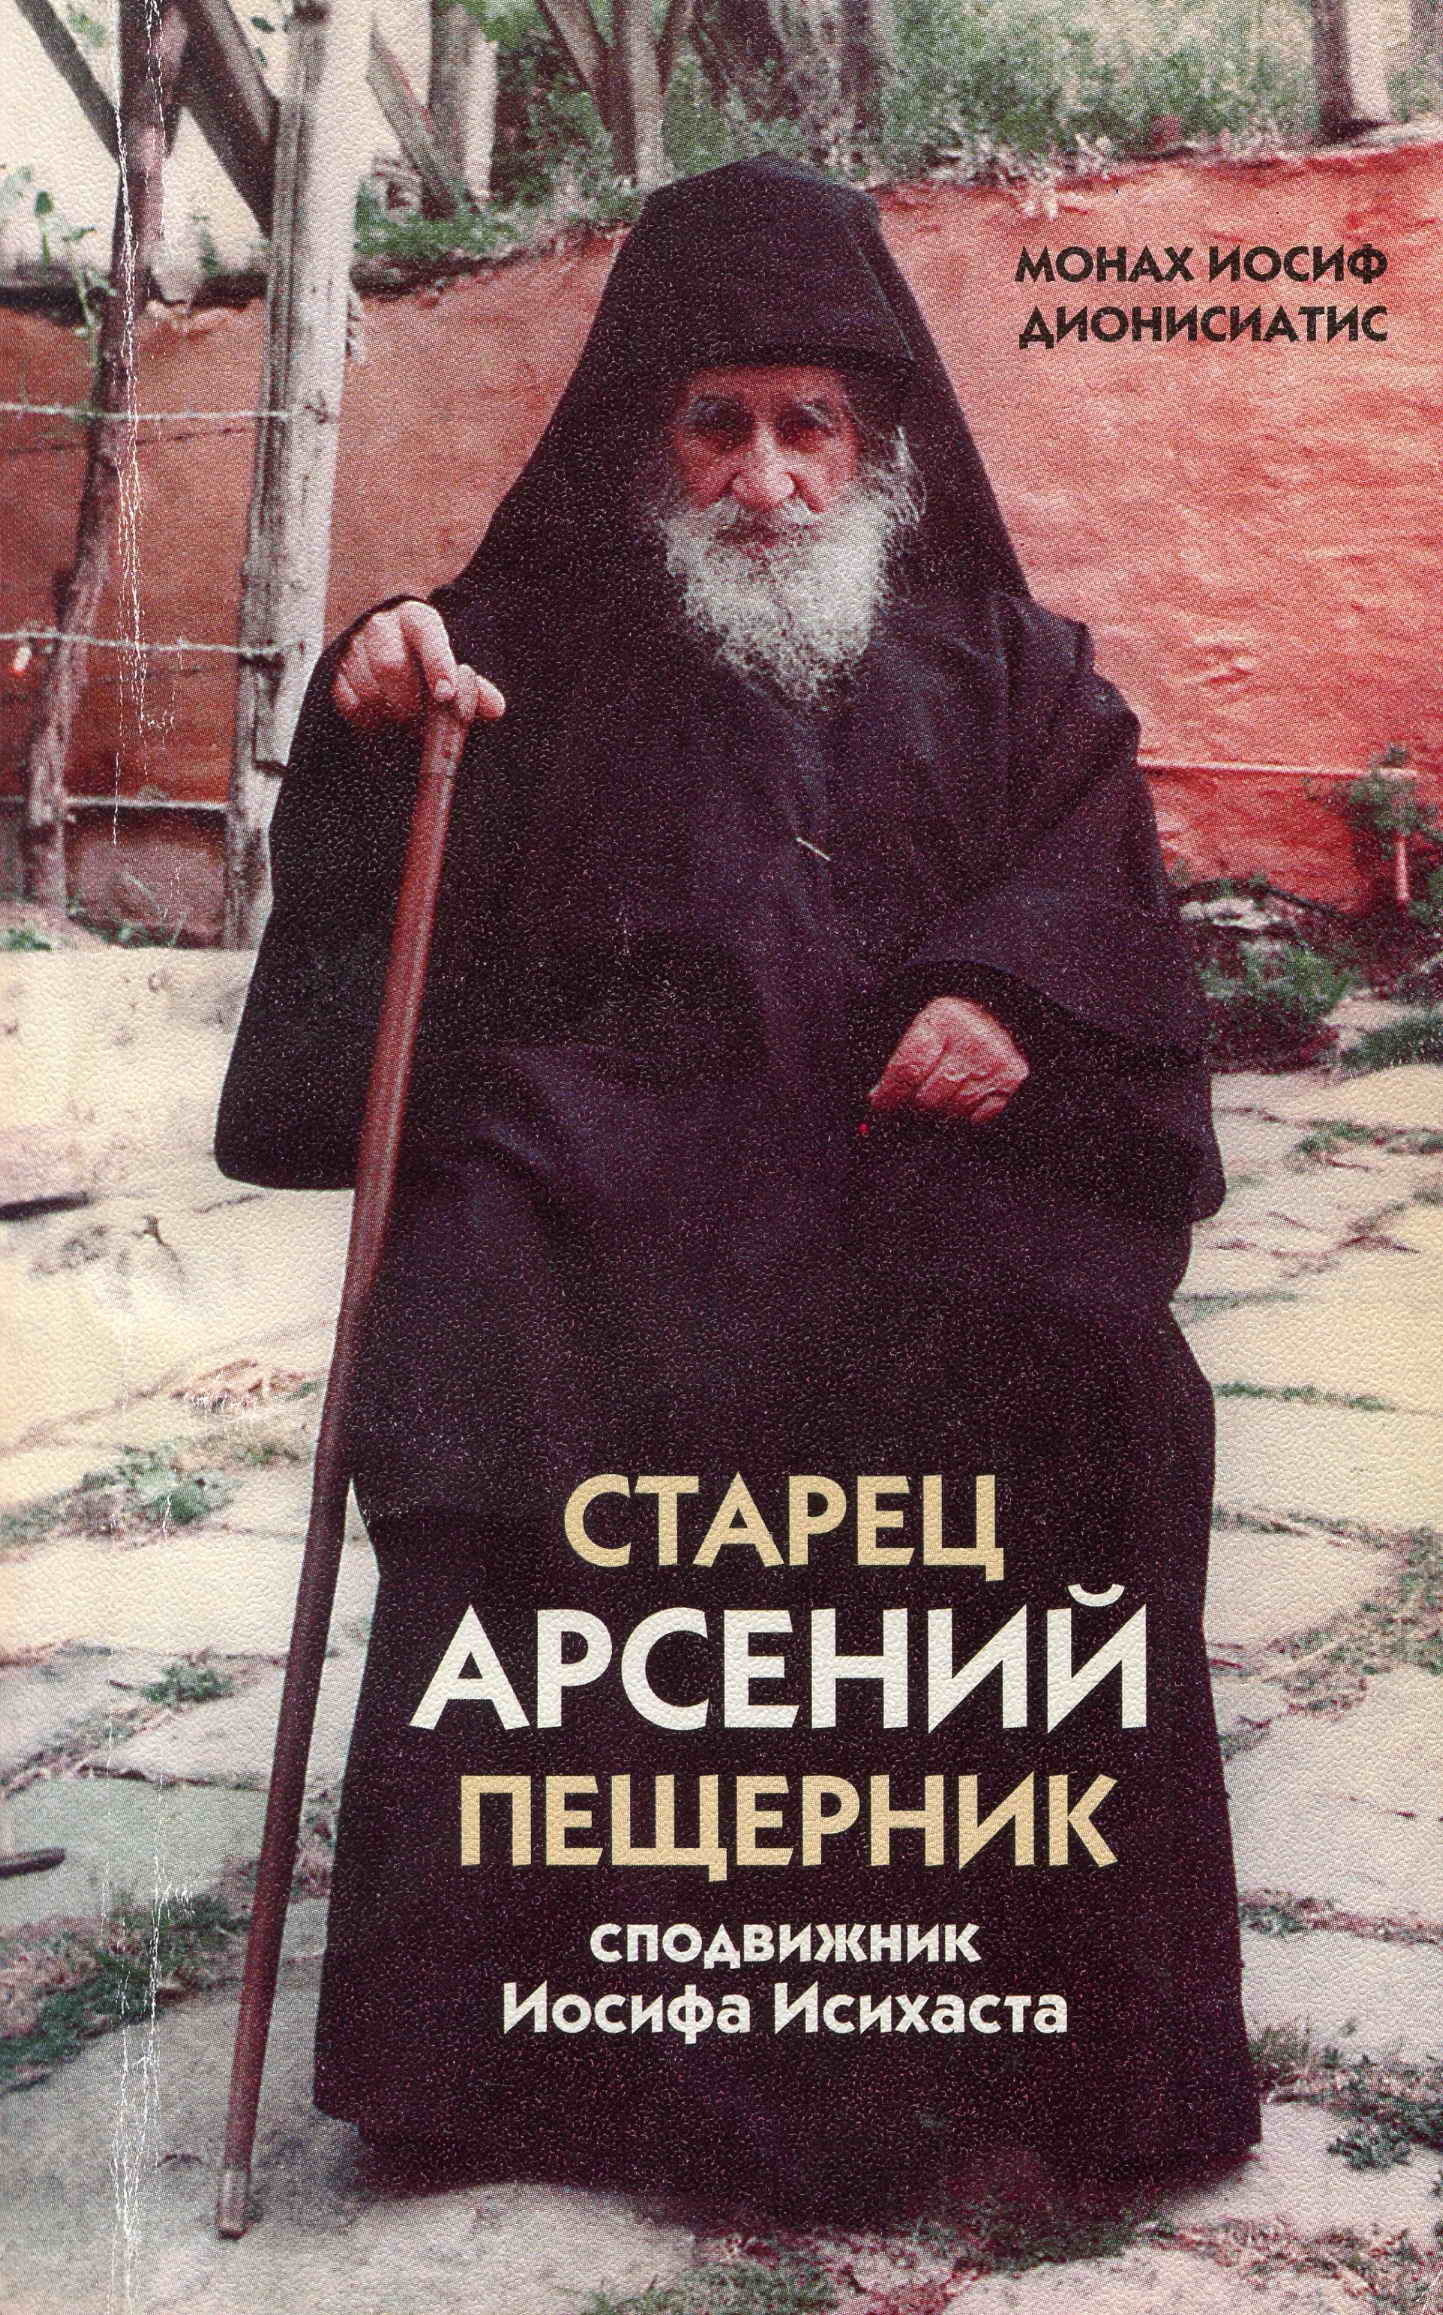 монах Иосиф Дионисиатис бесплатно